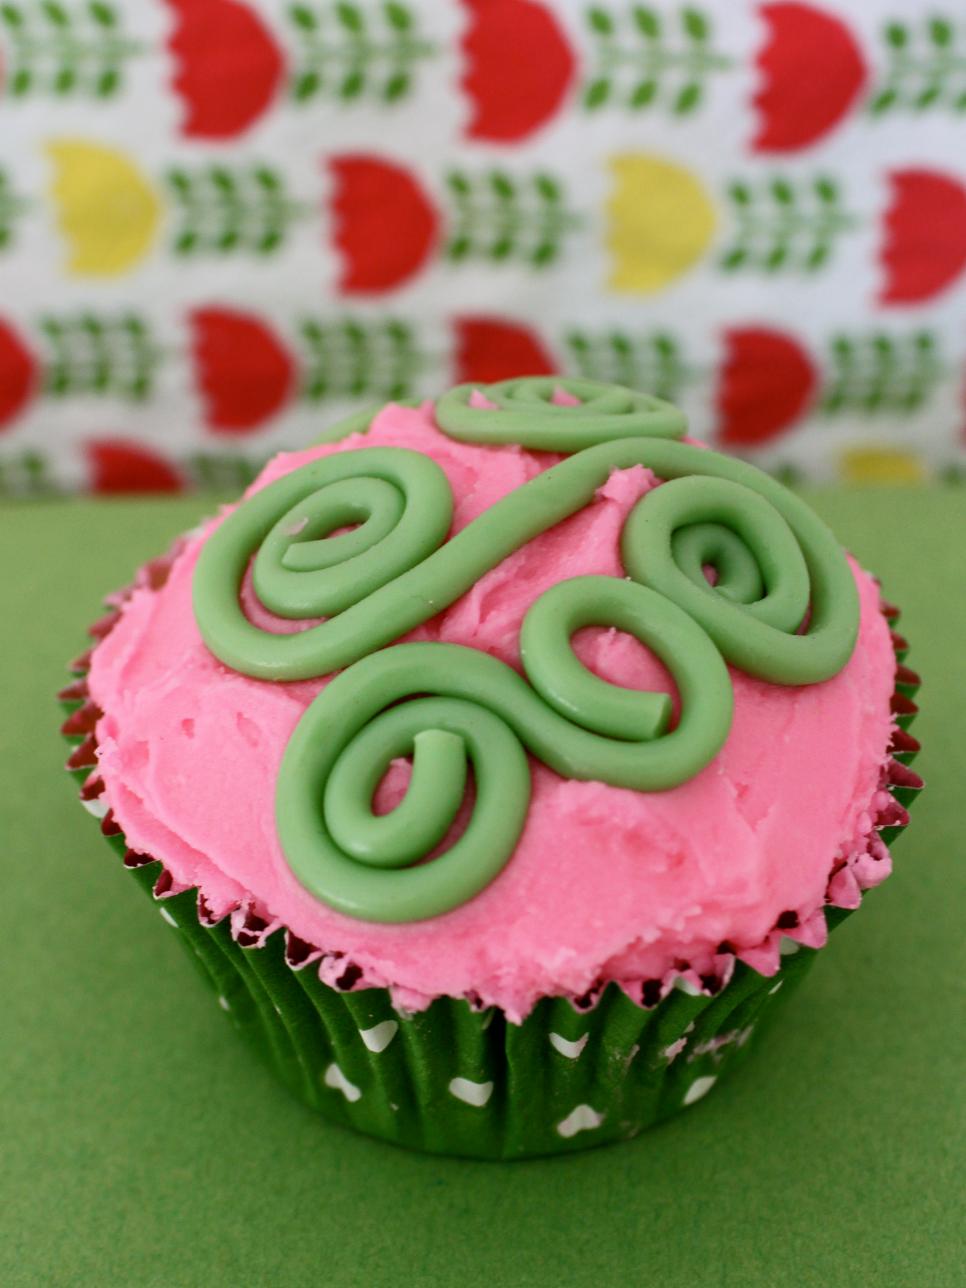 14 Easy Easter Cupcake Decorating Ideas | HGTV